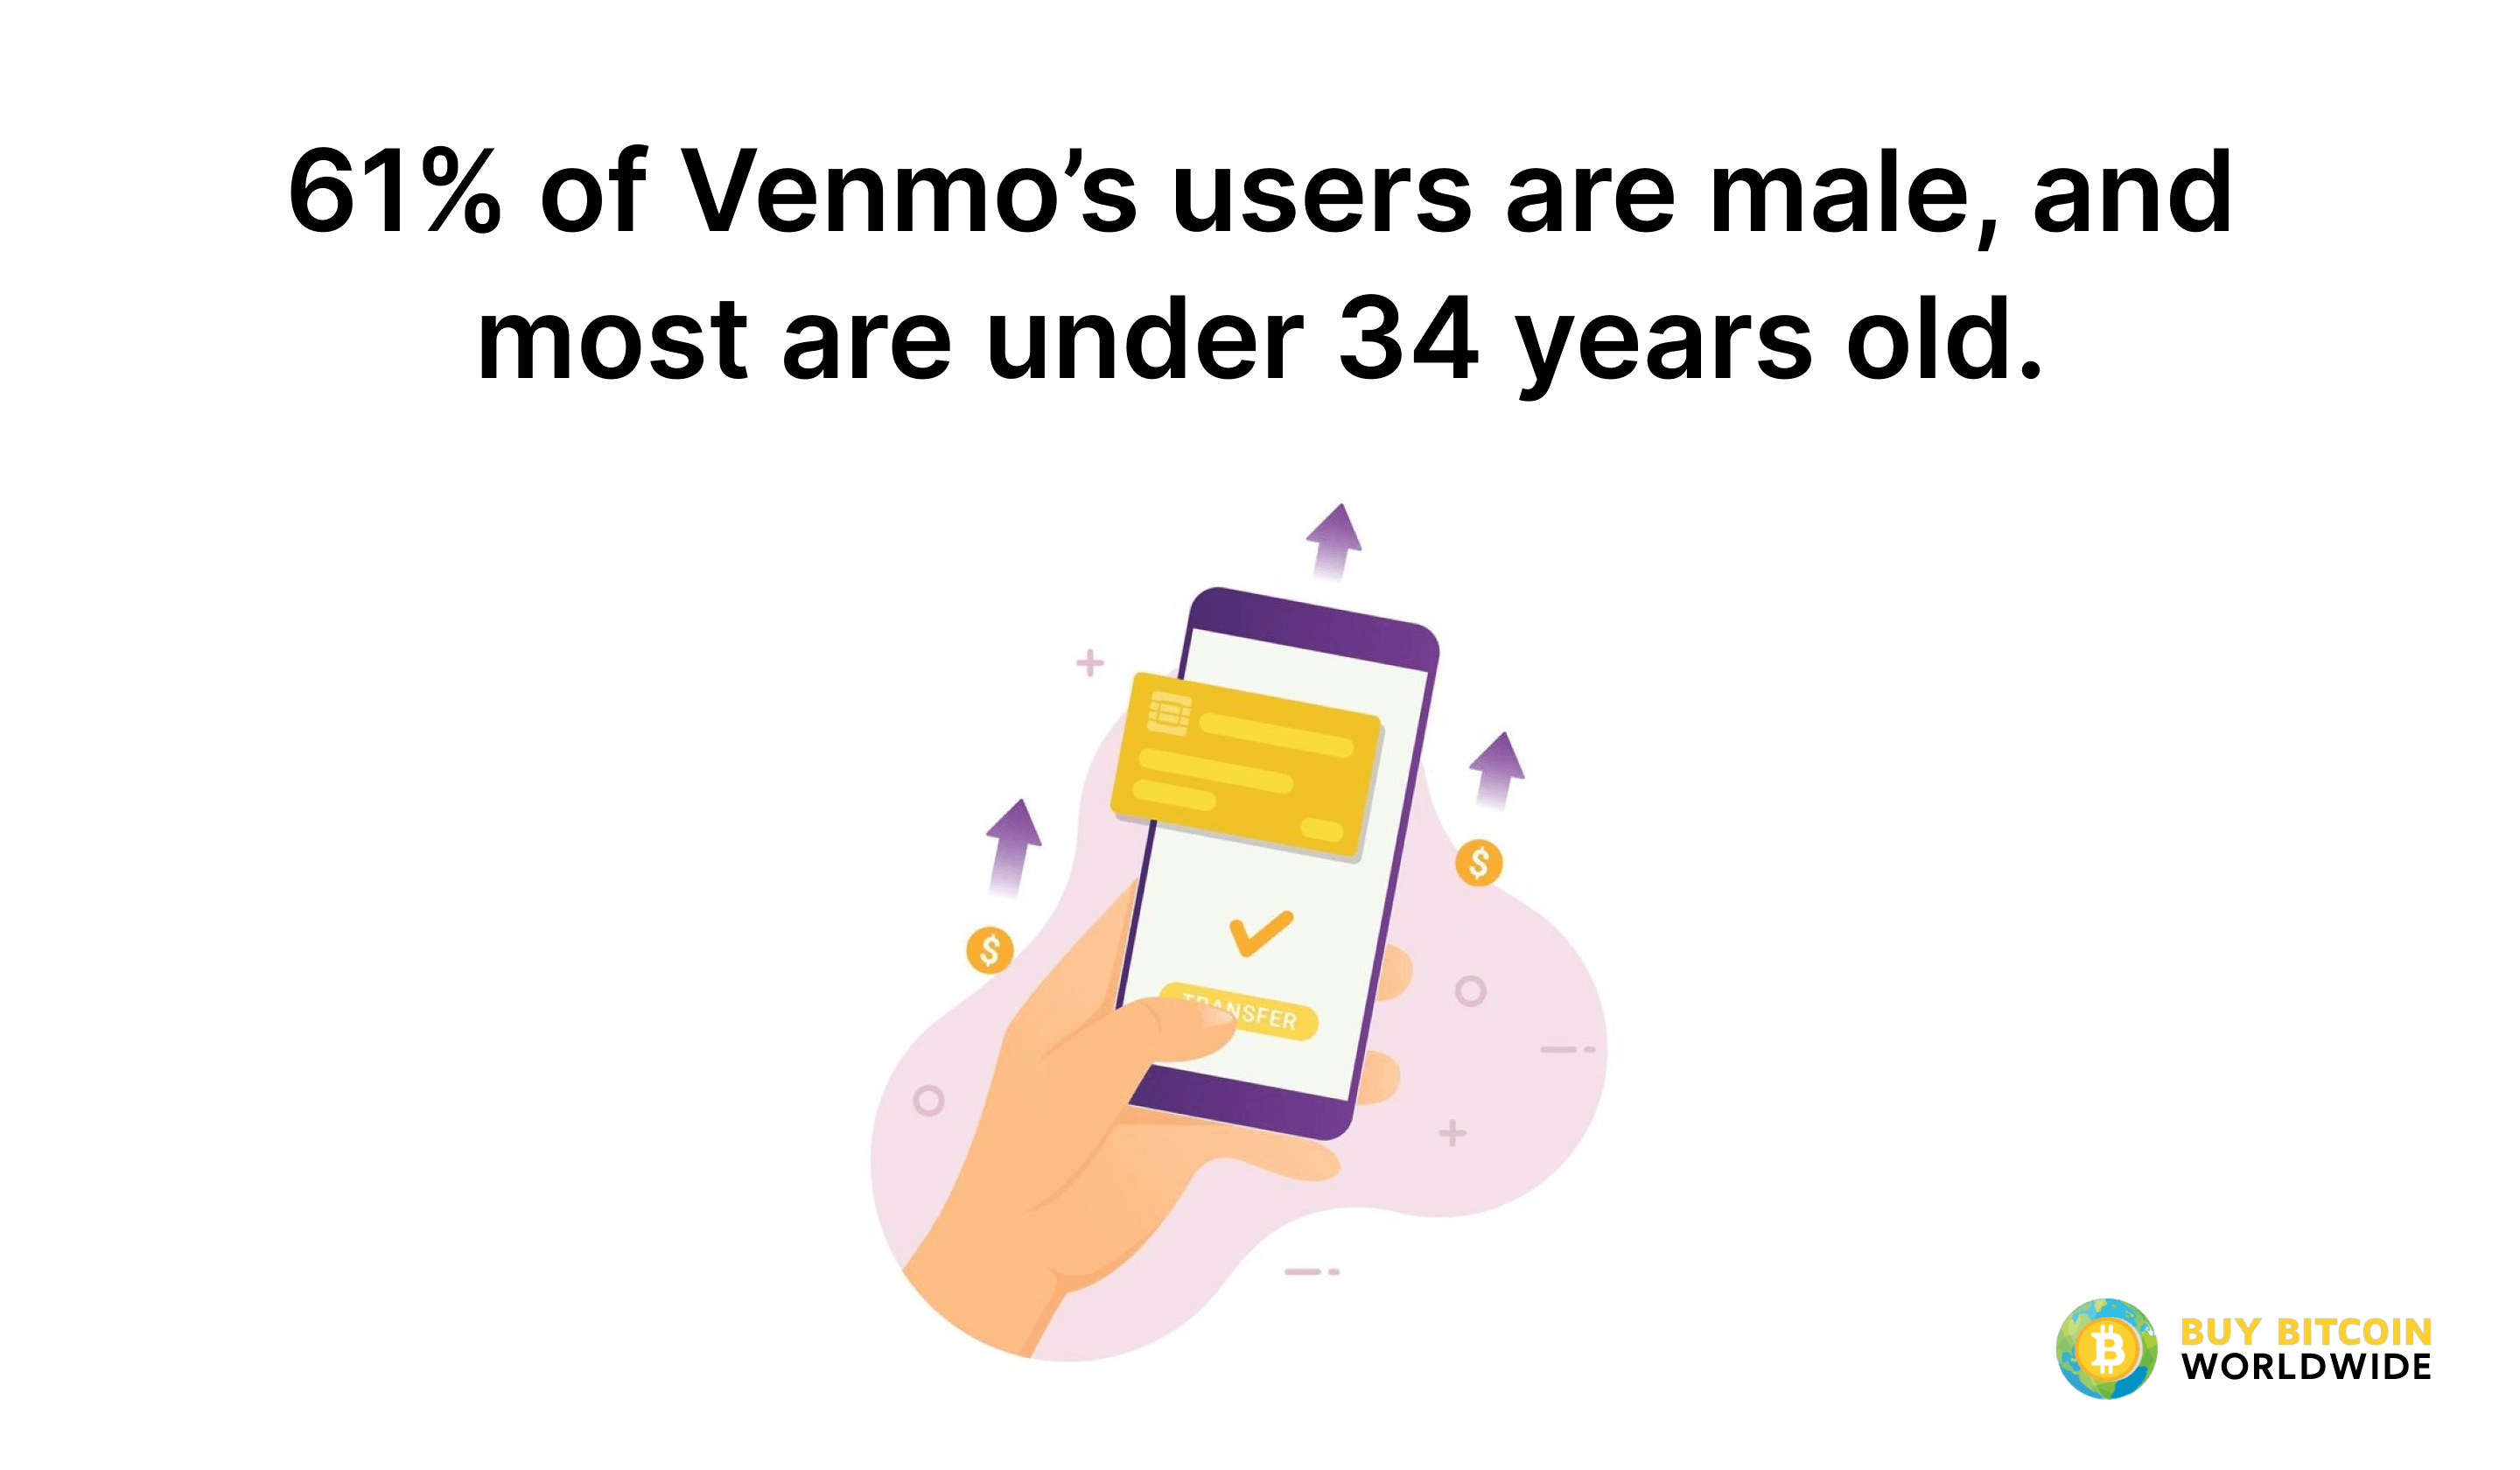 venmo user demographics